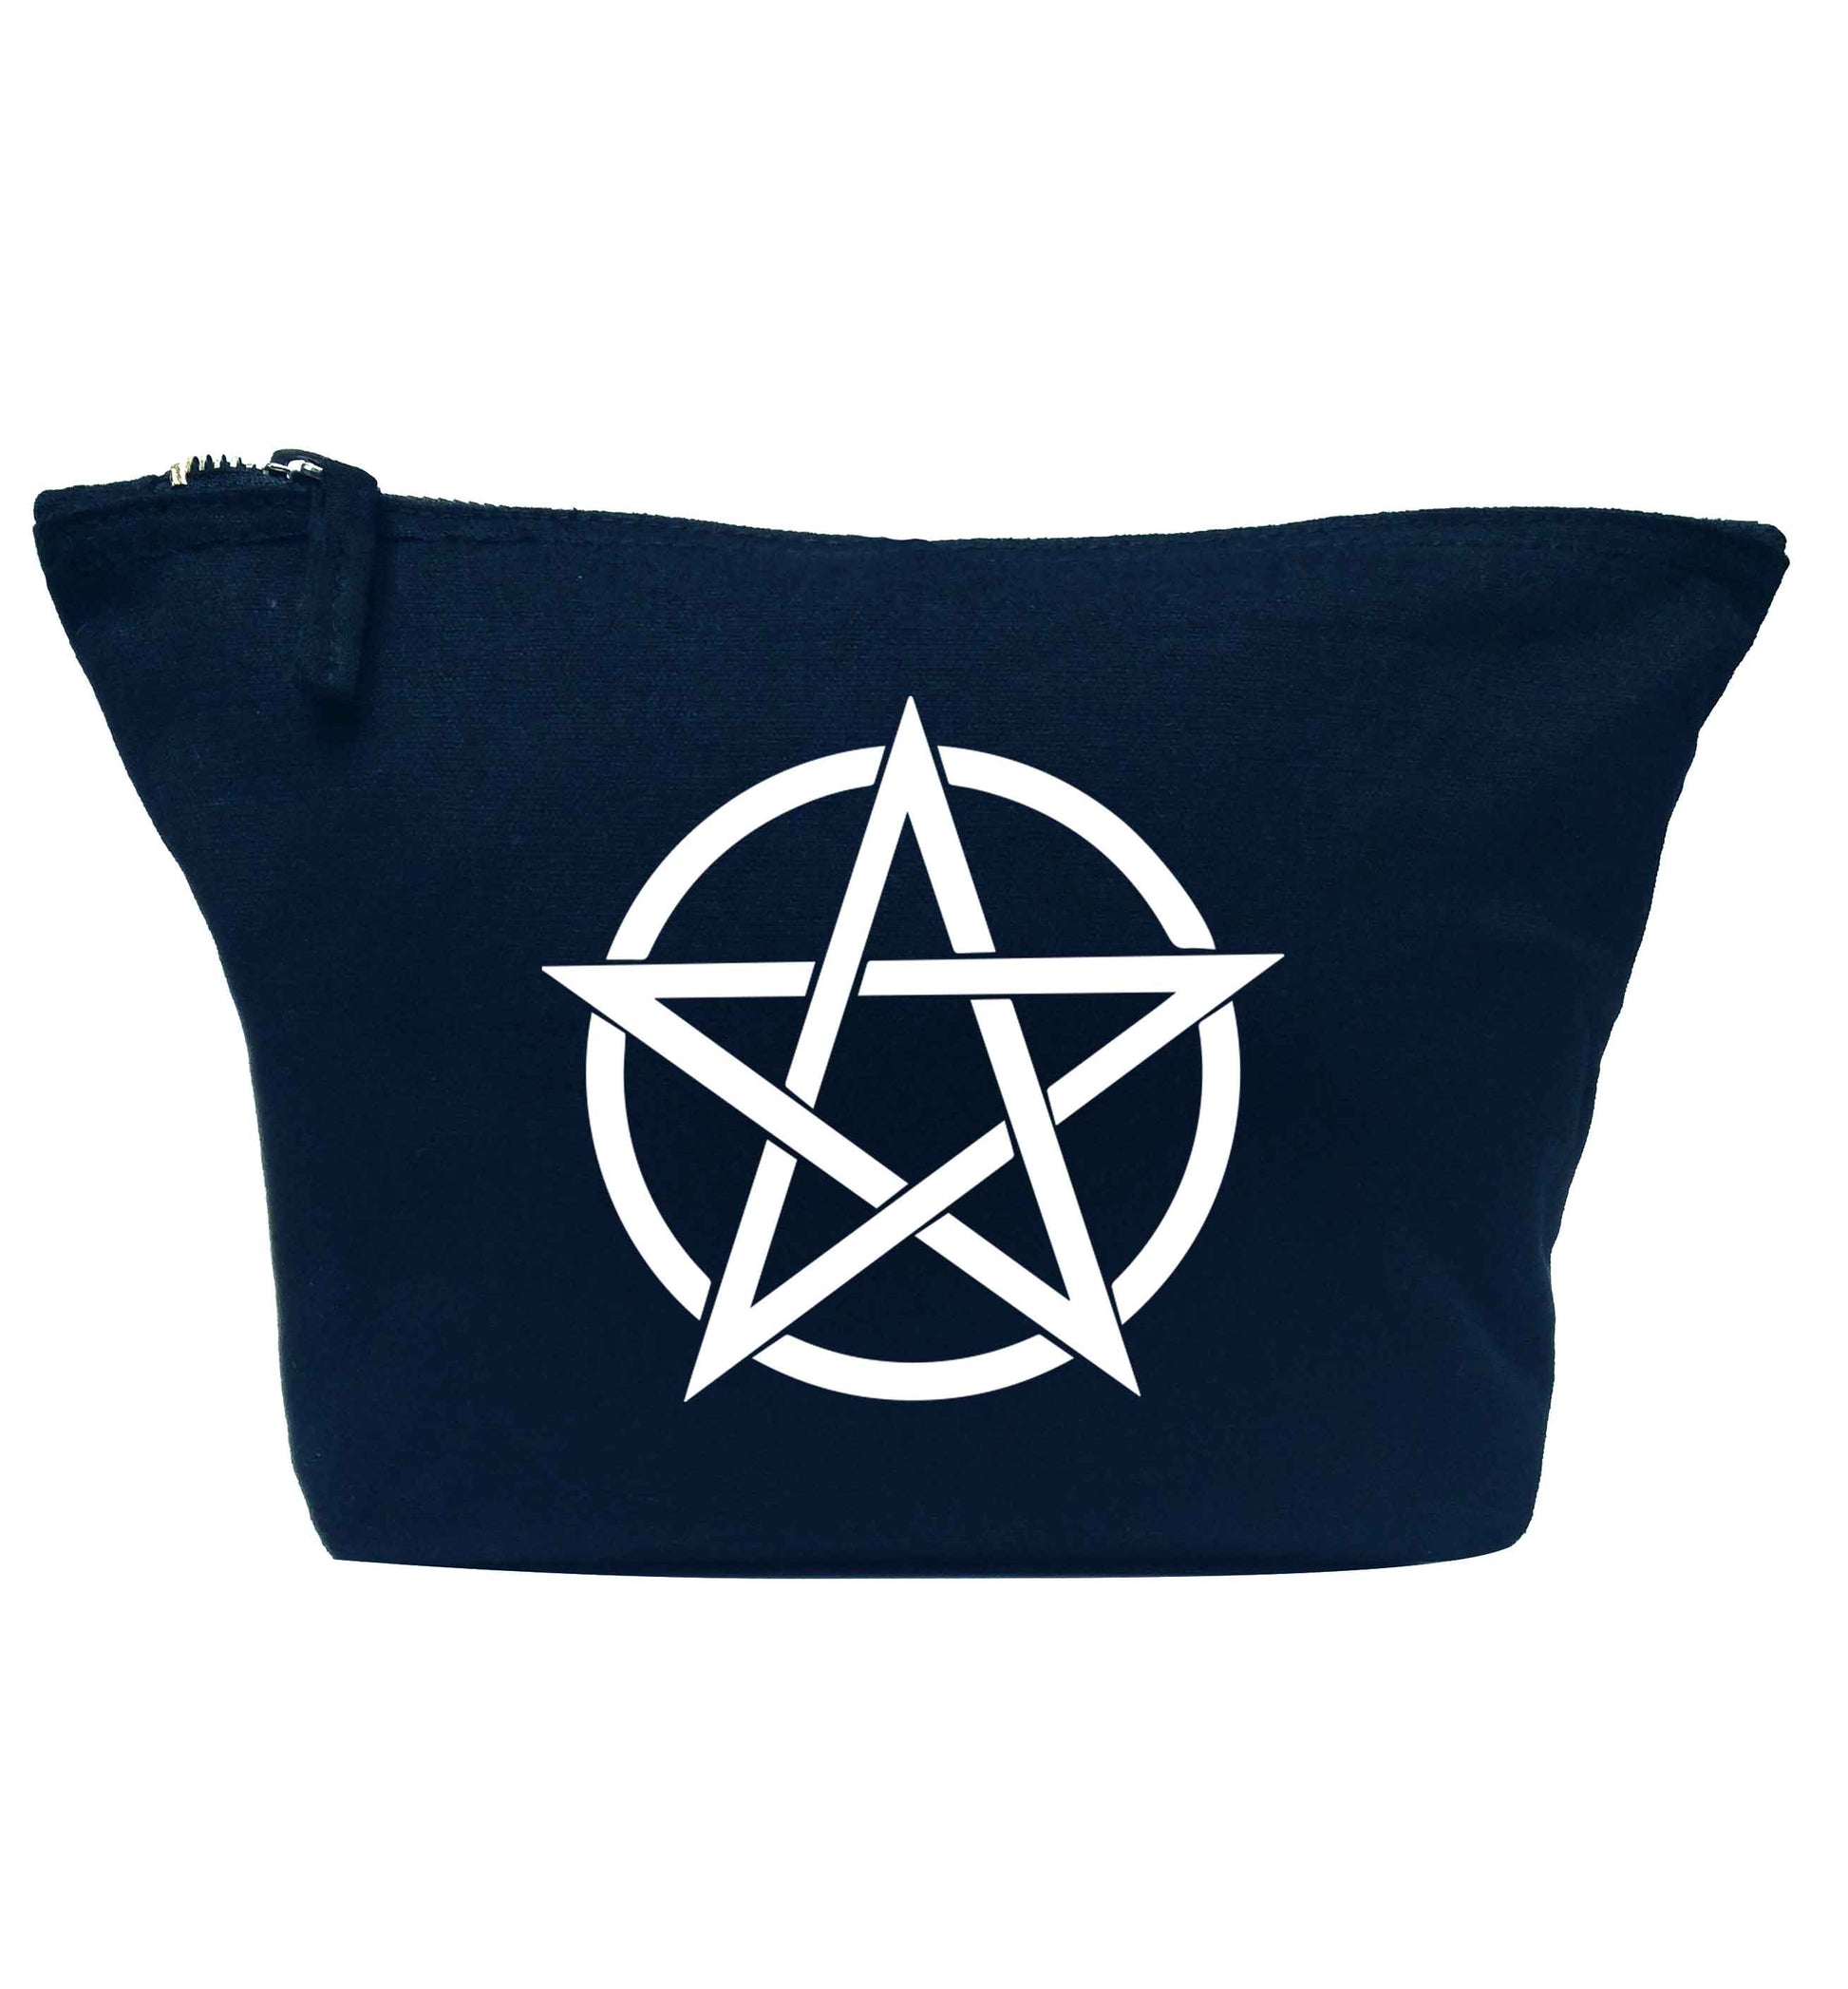 Pentagram symbol navy makeup bag